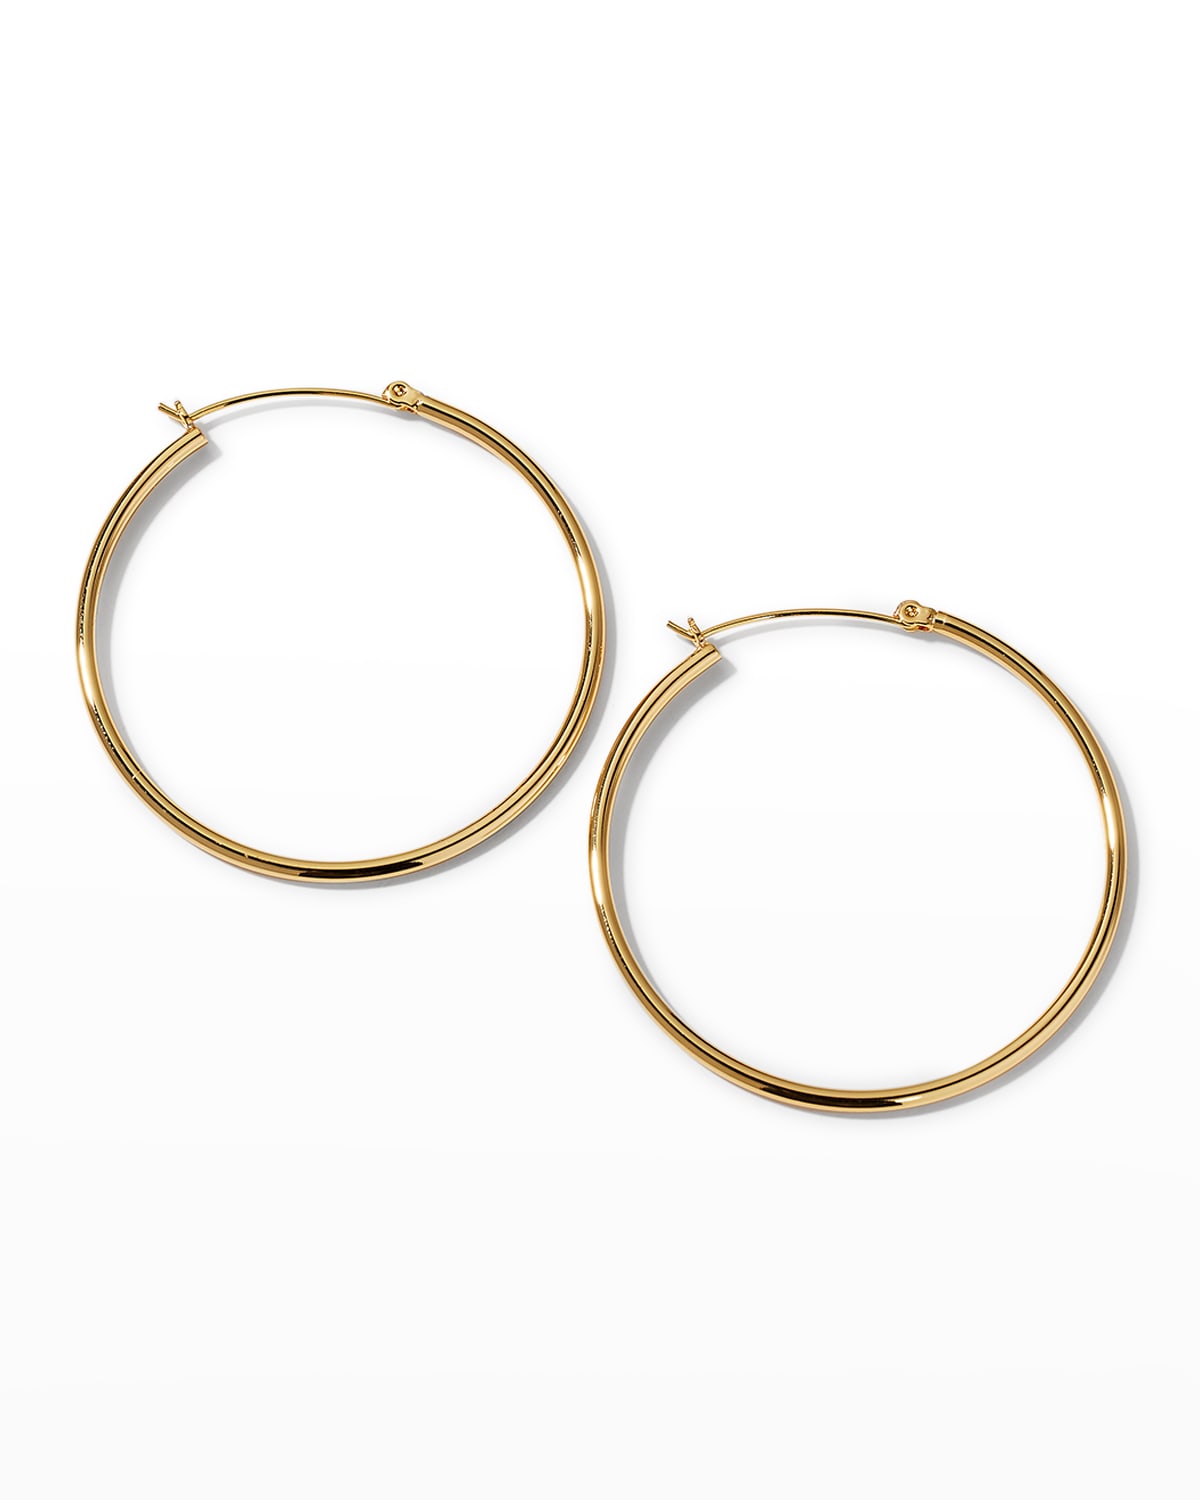 Devon Leigh Small Gold Hoop Earrings, 1.25